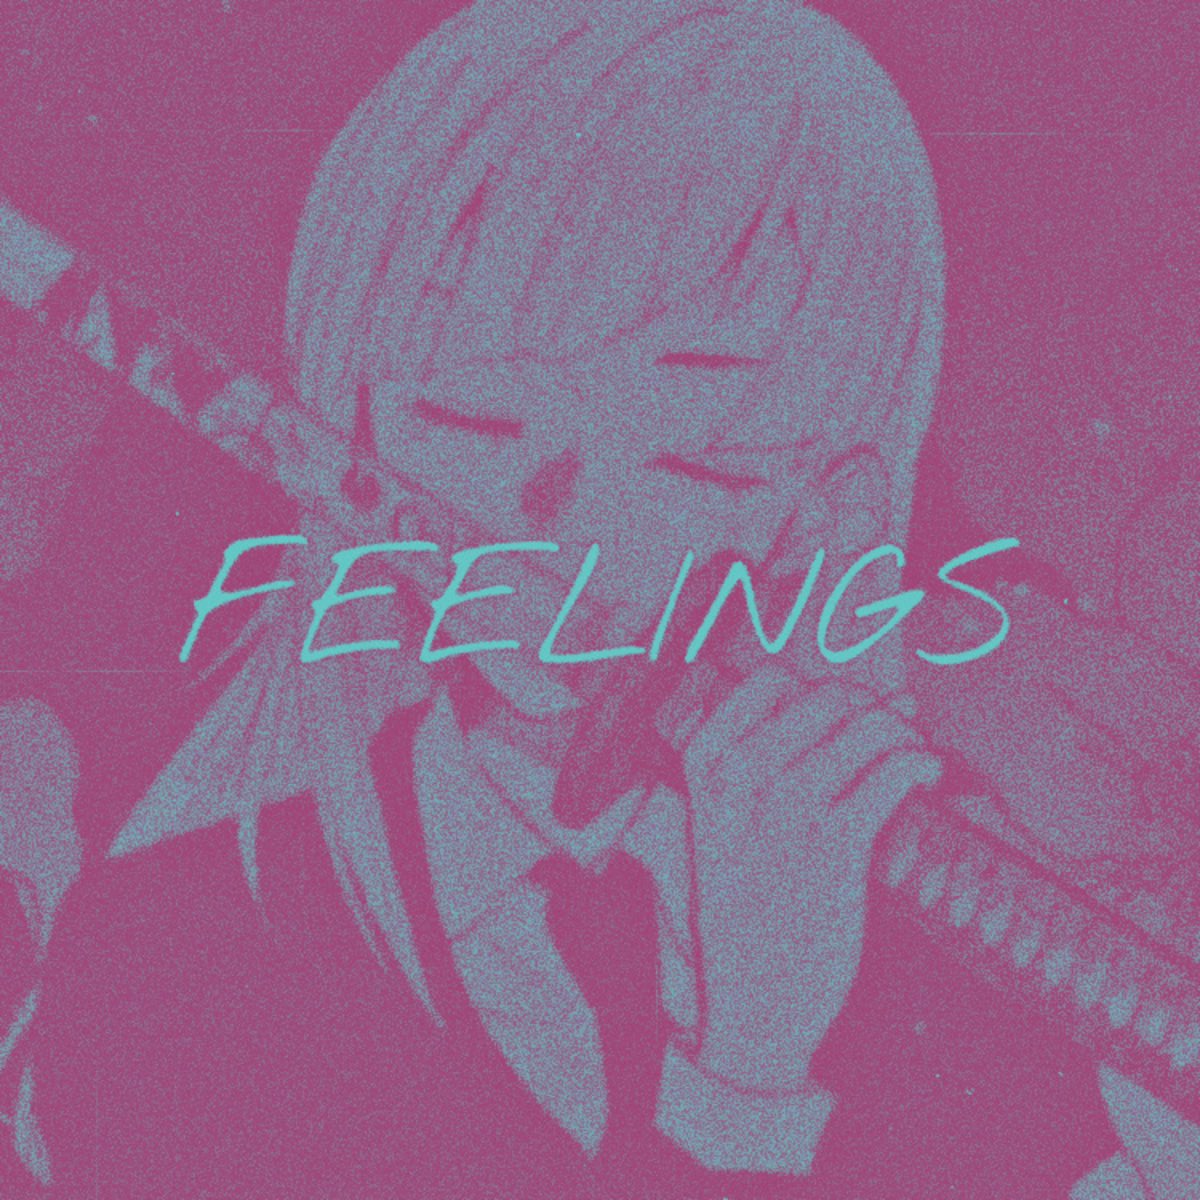 Sea of feelings (Slowed) LOWX. This feeling slowed